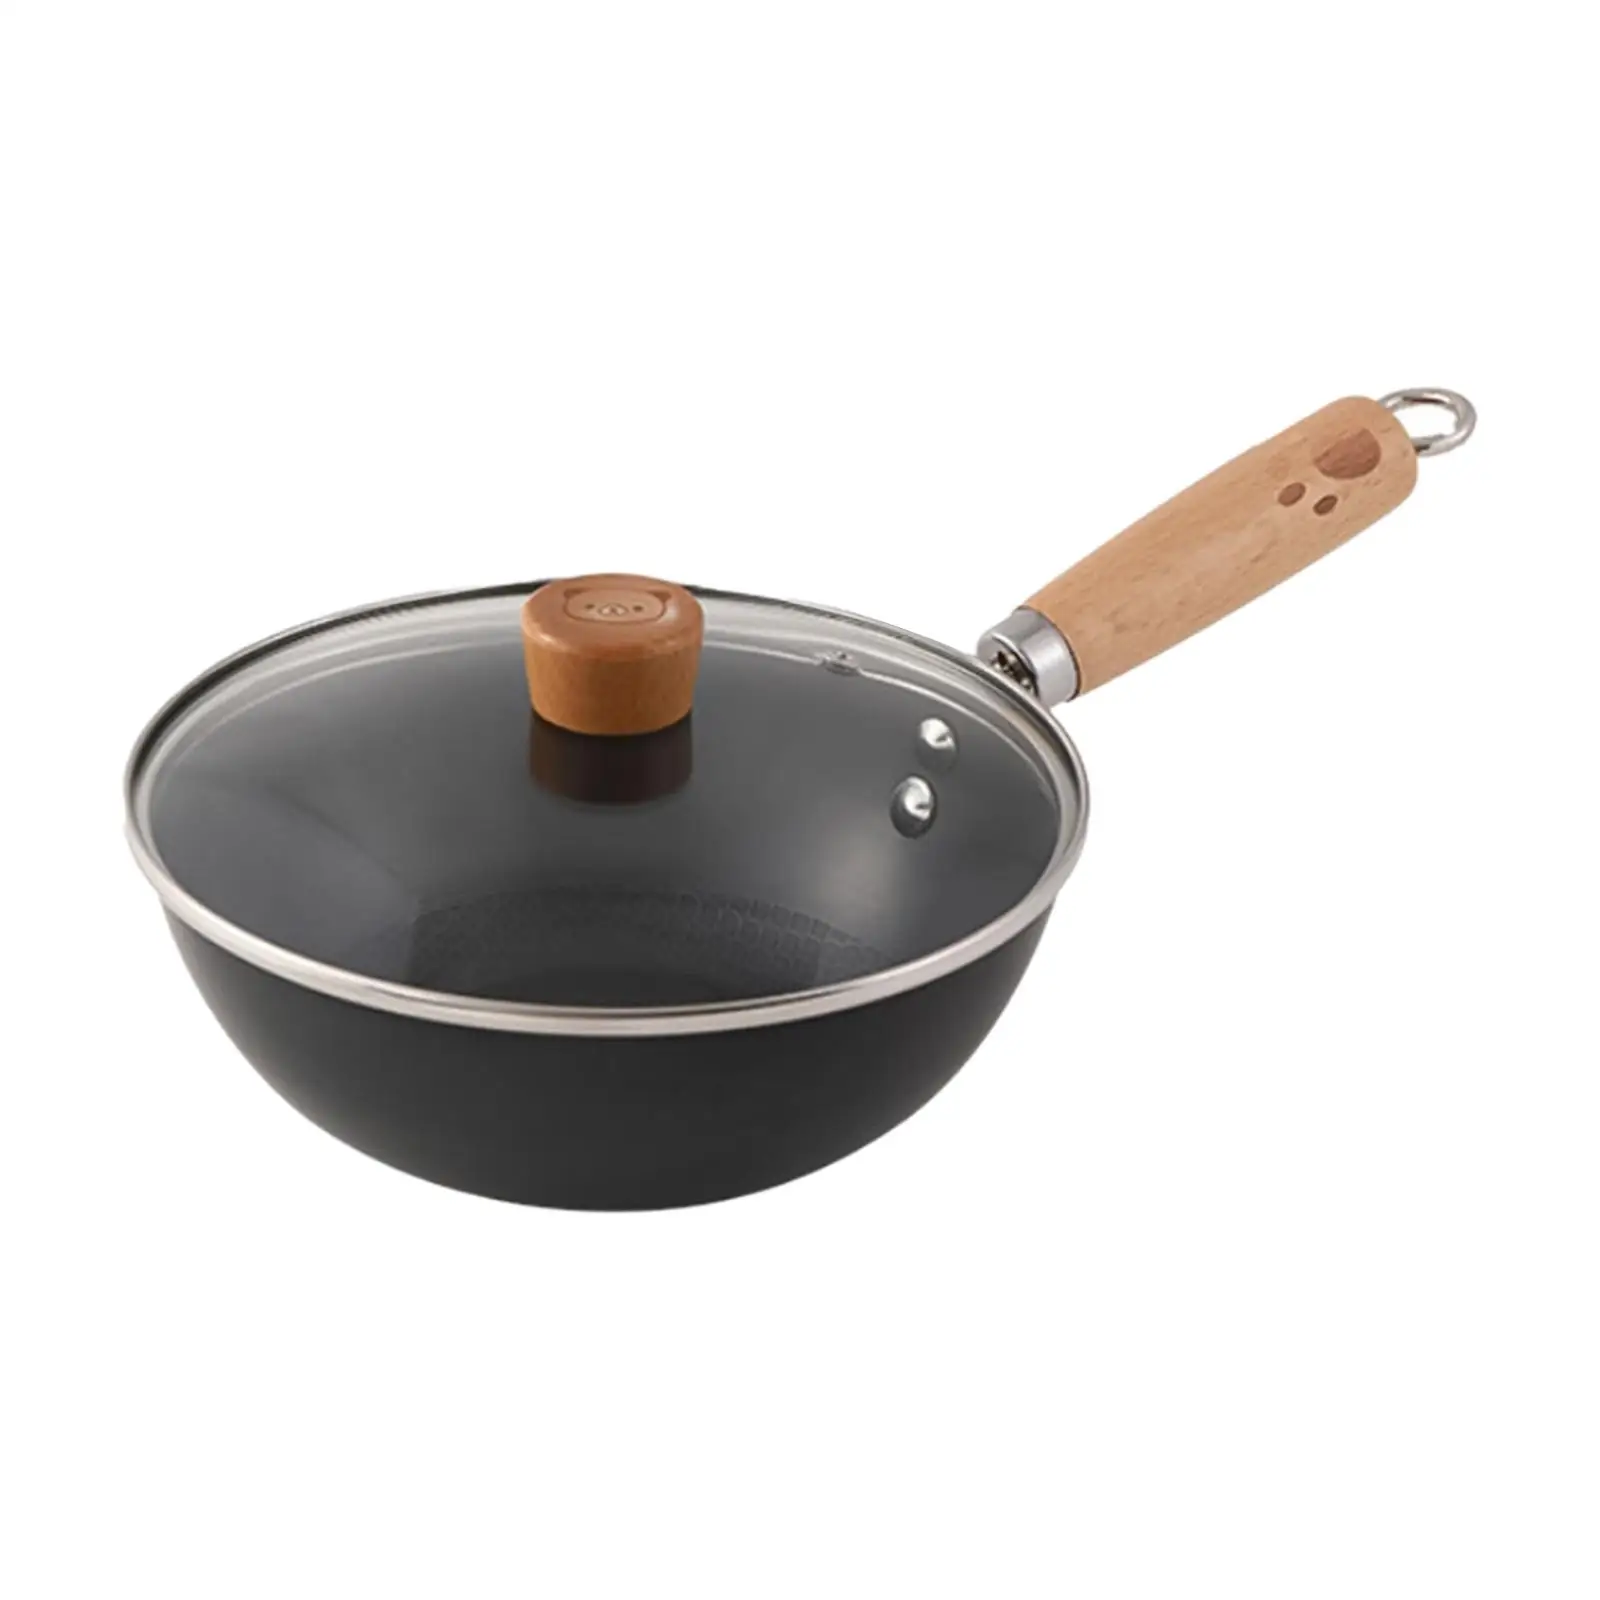 Nonstick Wok Universal Cookware Wood Handle Induction Cooker Uncoated Wok Pan Flat Bottom Wok Frying Pan with Lid